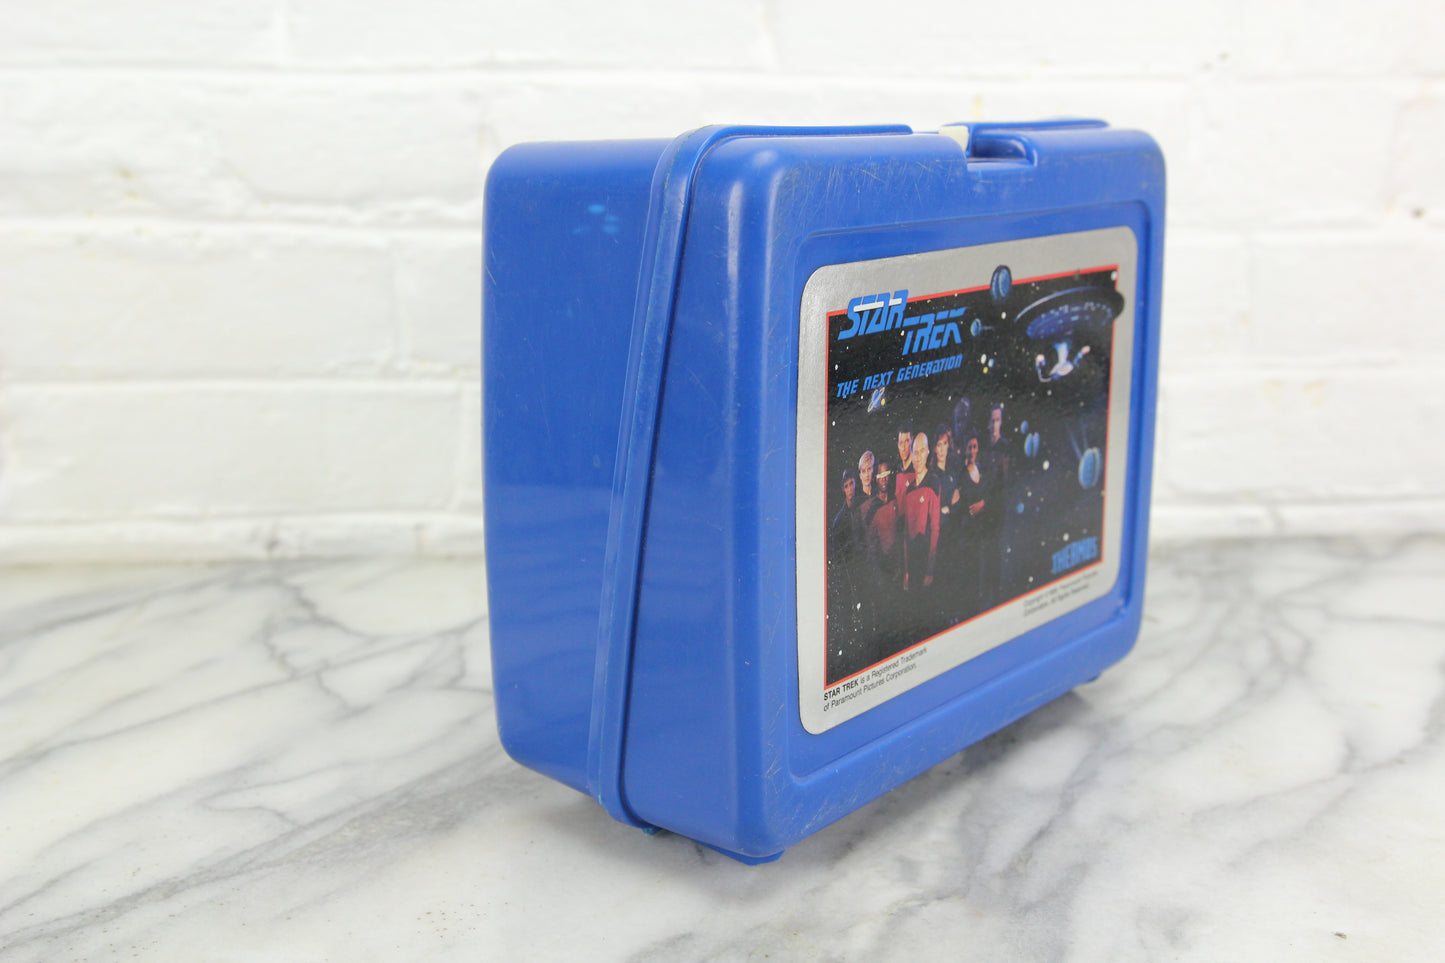 Star Trek The Next Generation Thermos Brand Blue Plastic Lunchbox, 1988